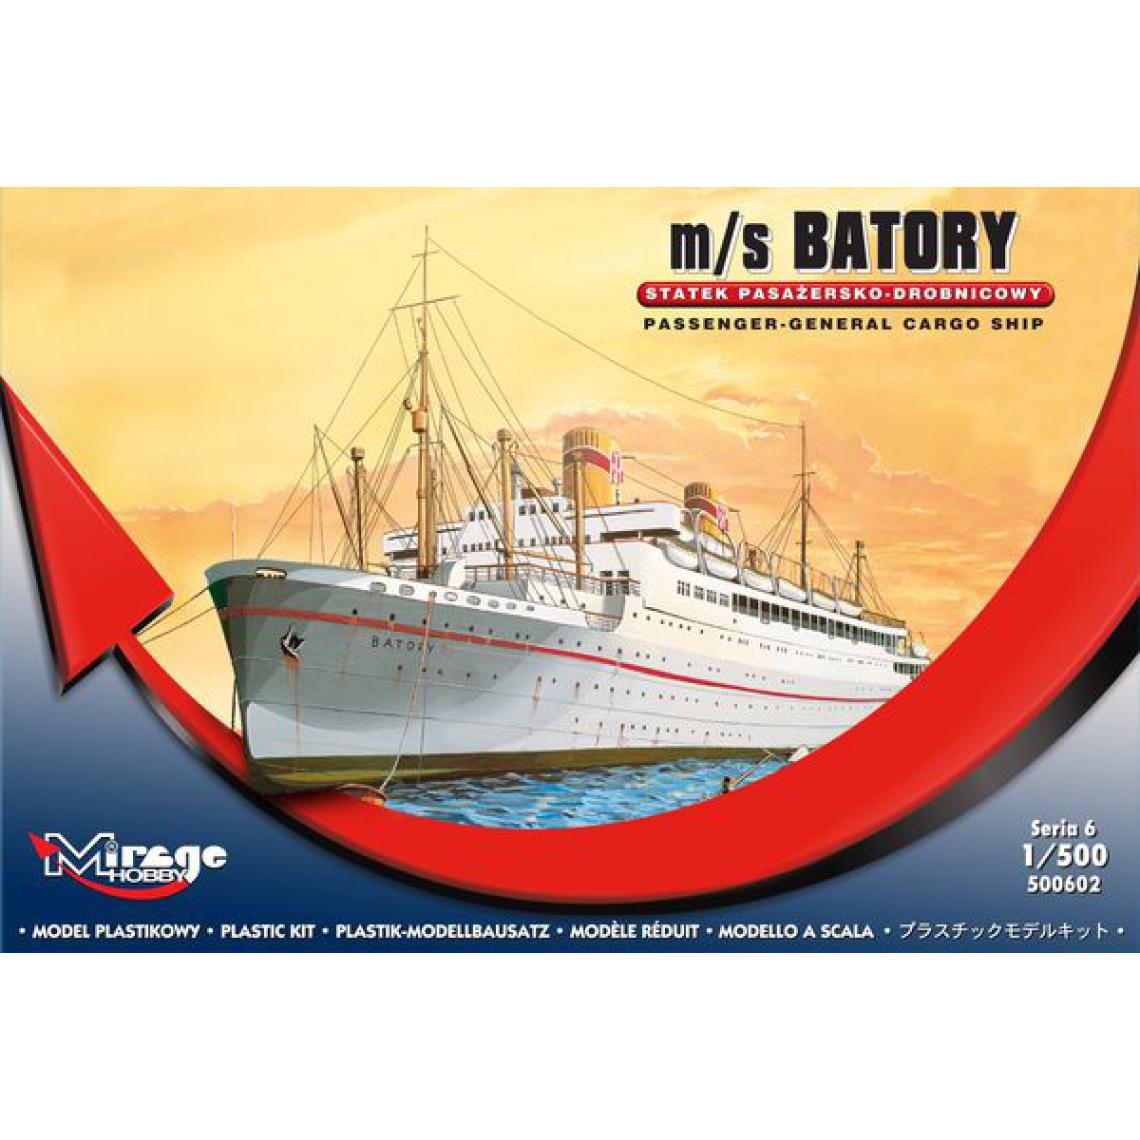 Mirage Hobby - m/s Batory Passenger- General Cargo Ship - 1:500e - Mirage Hobby - Accessoires et pièces